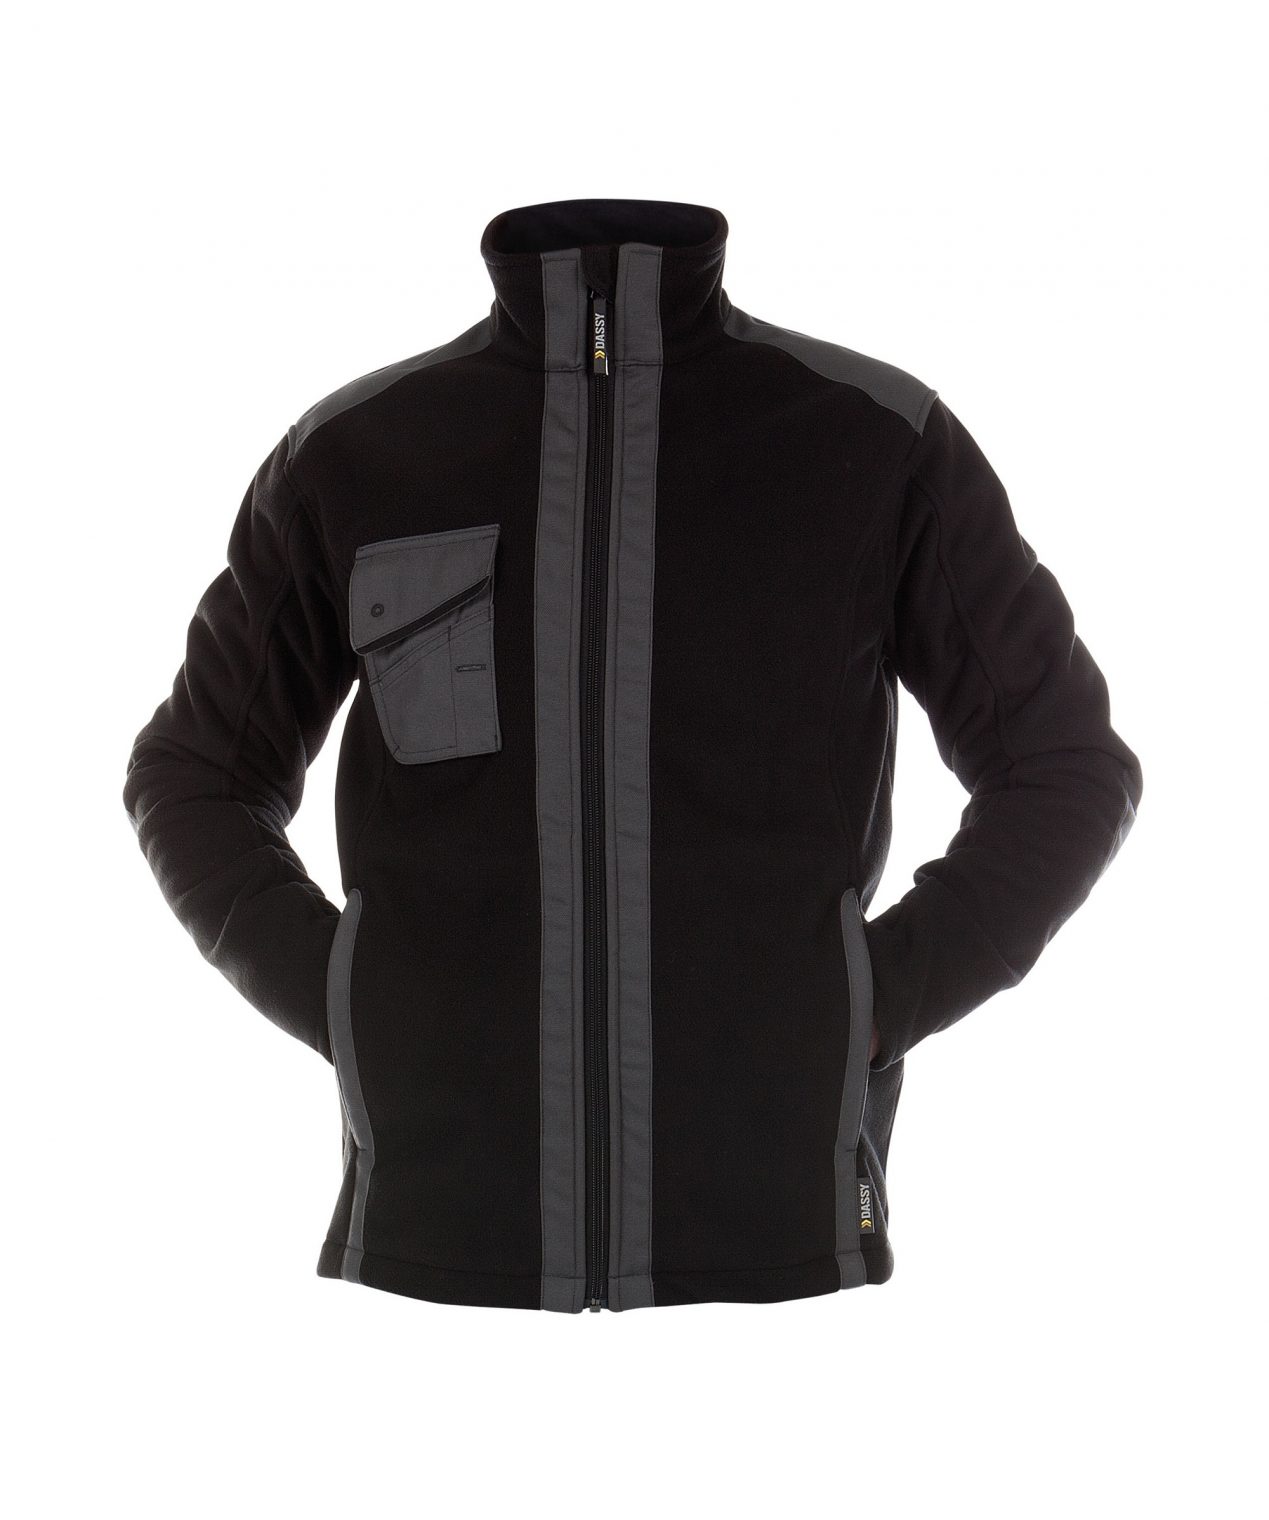 croft three layered fleece jacket black anthracite grey front